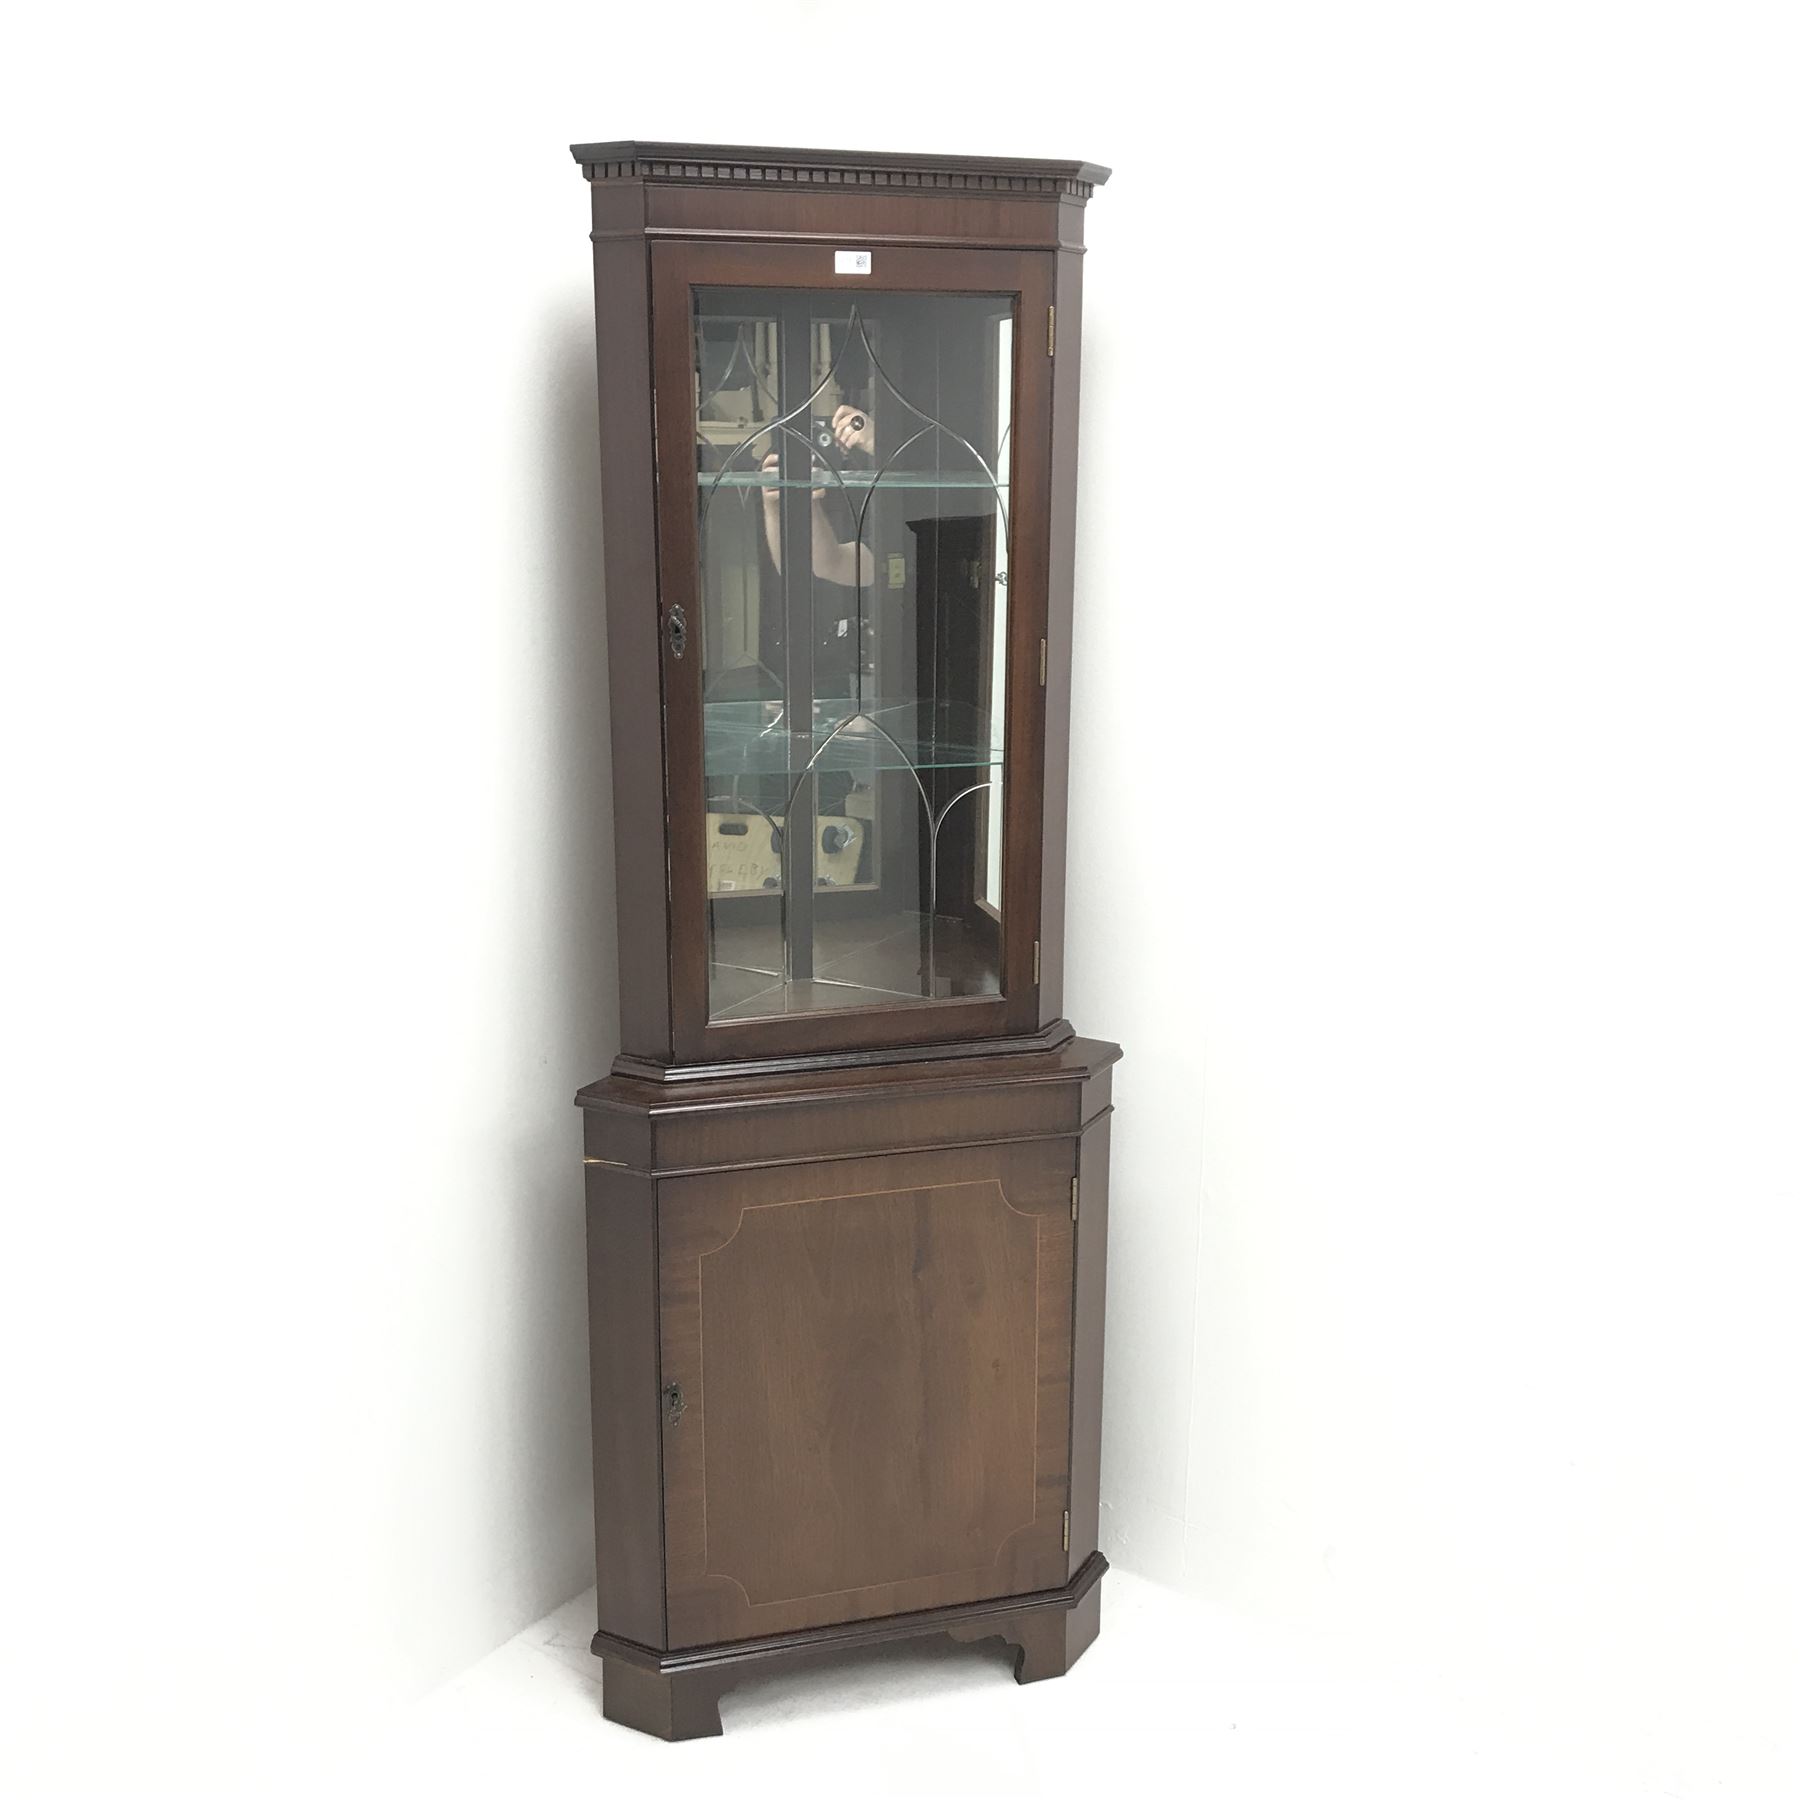 20th century mahogany corner display cabinet, single glazed door enclosing two shelves above single - Image 3 of 3